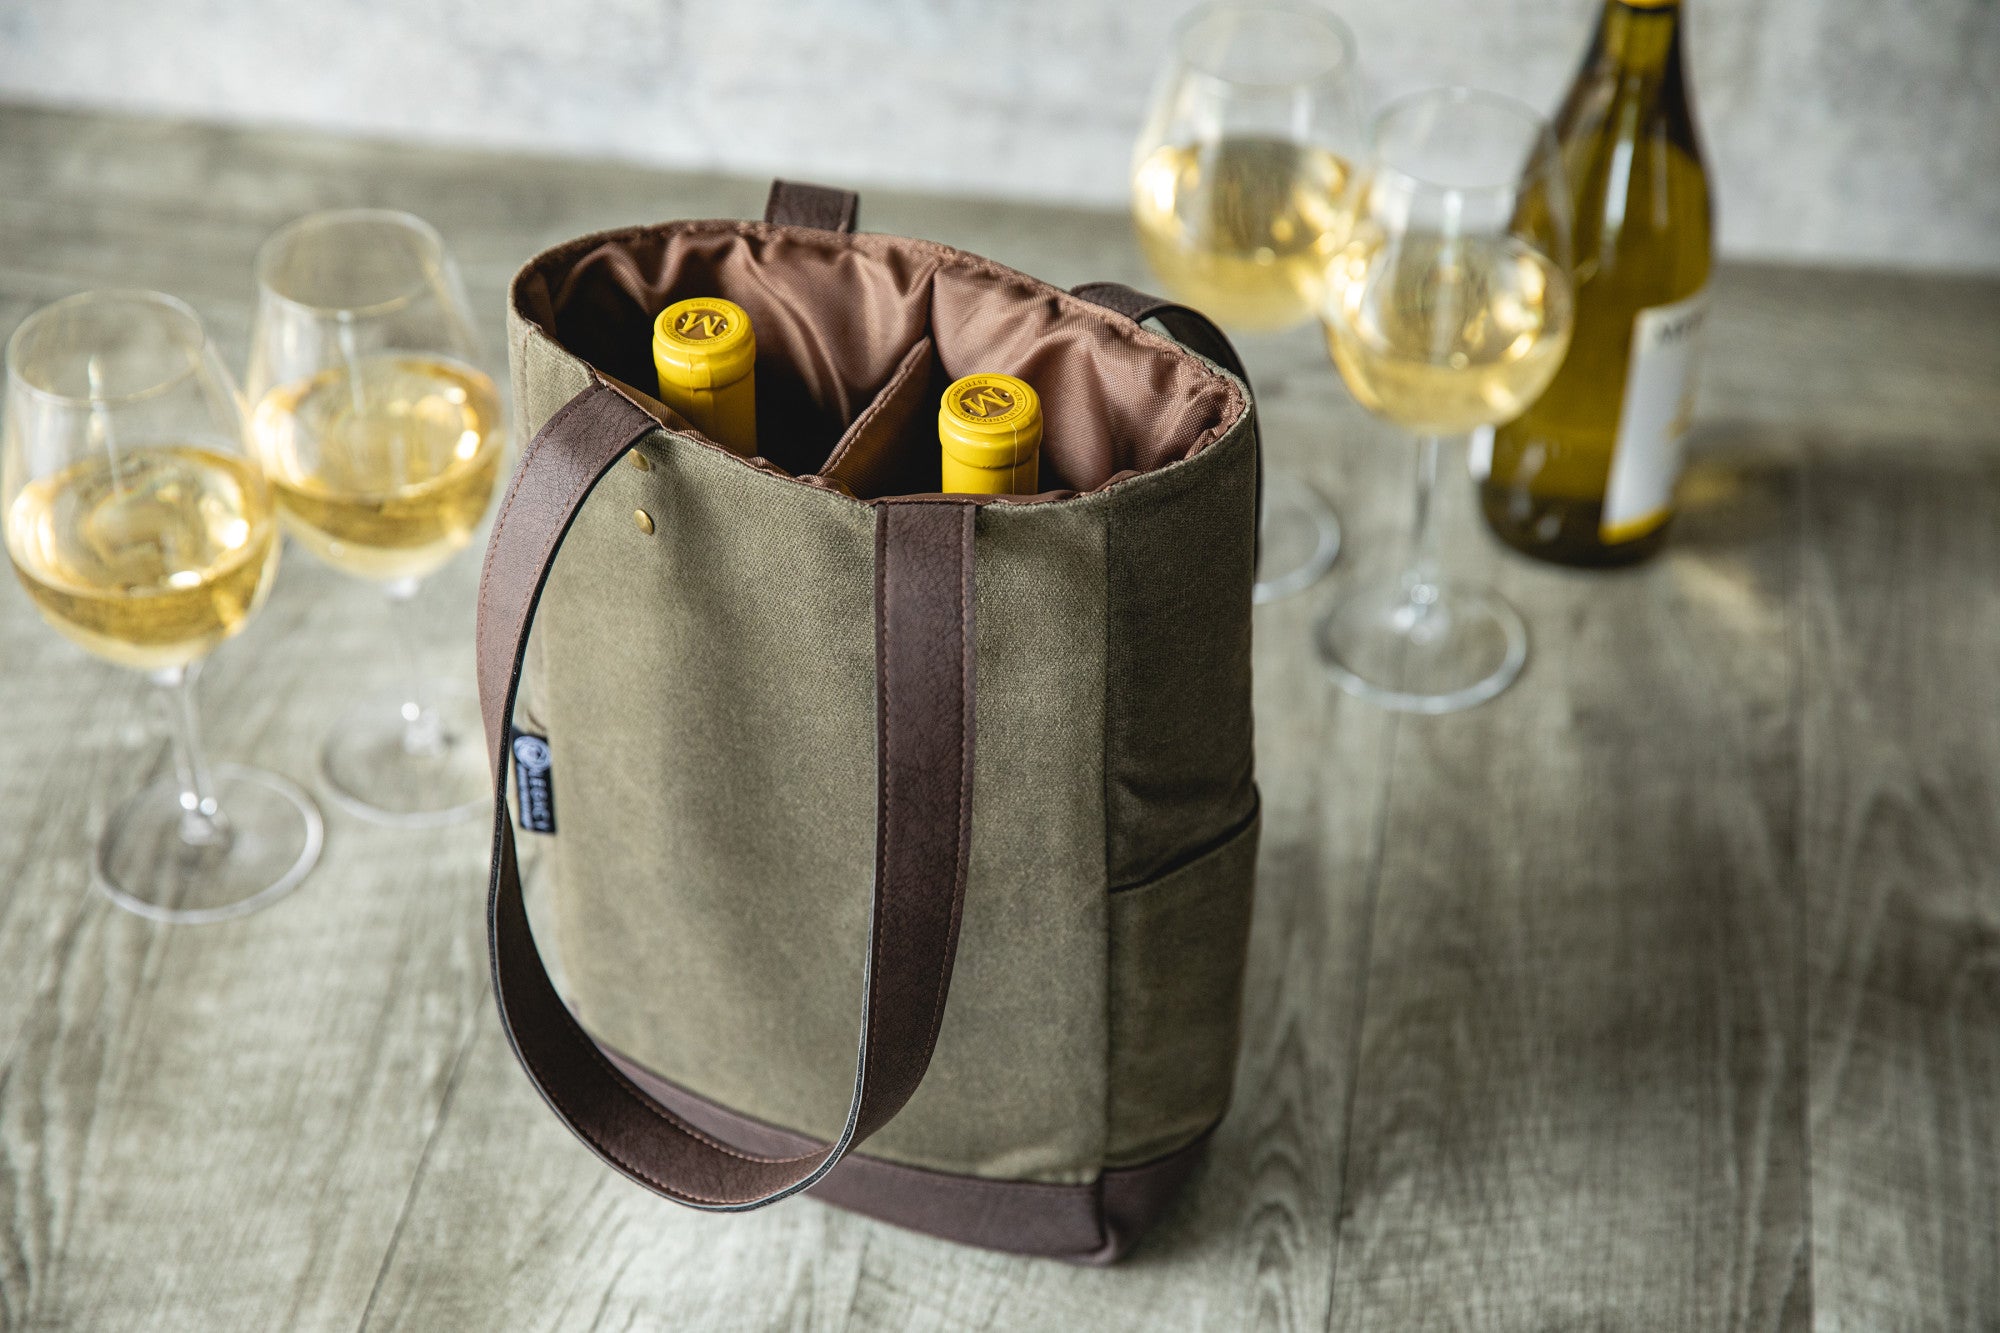 TCU Horned Frogs - 2 Bottle Insulated Wine Cooler Bag